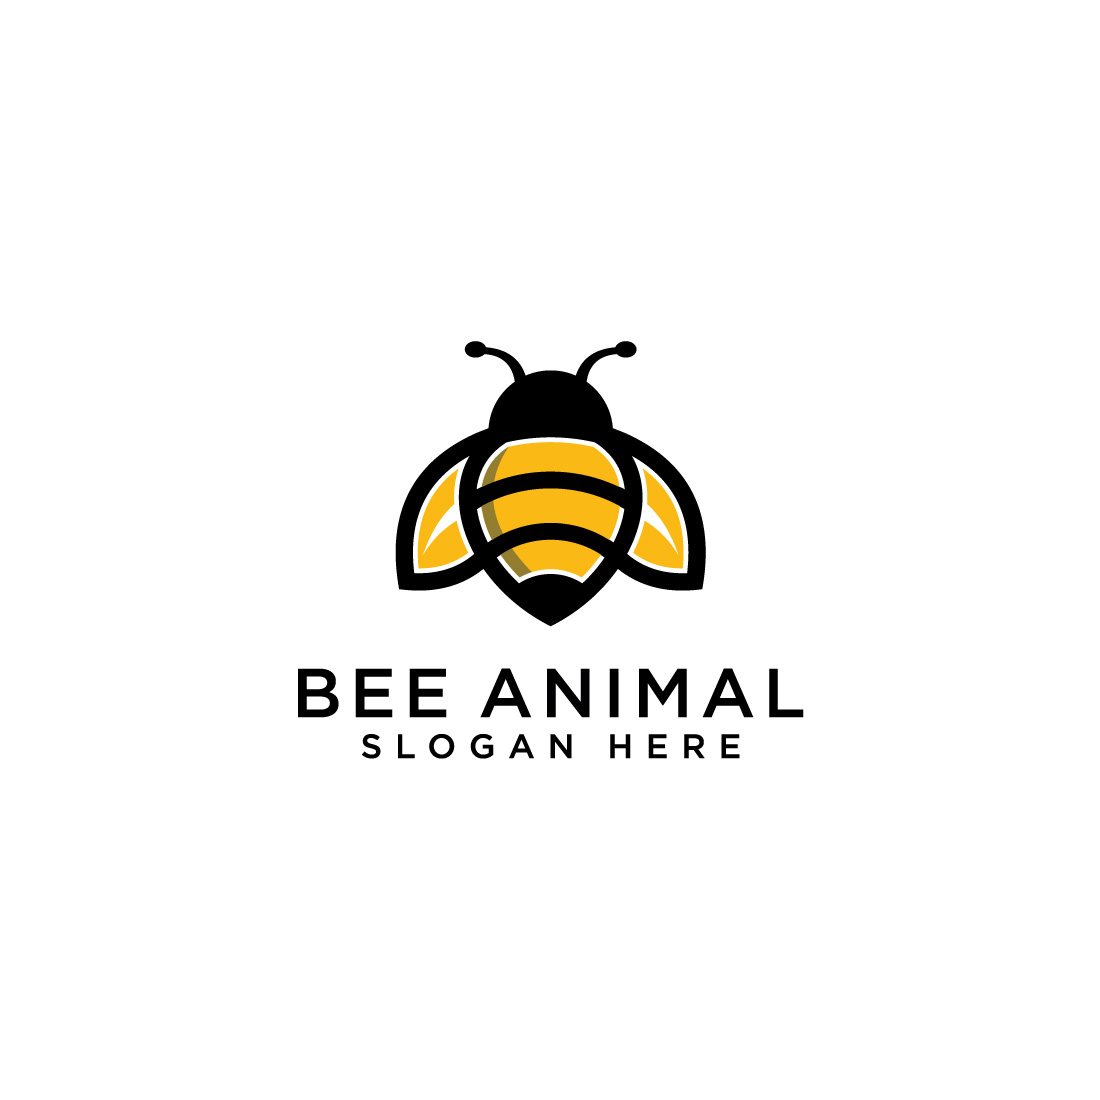 honey Bee animals logo vector preview image.